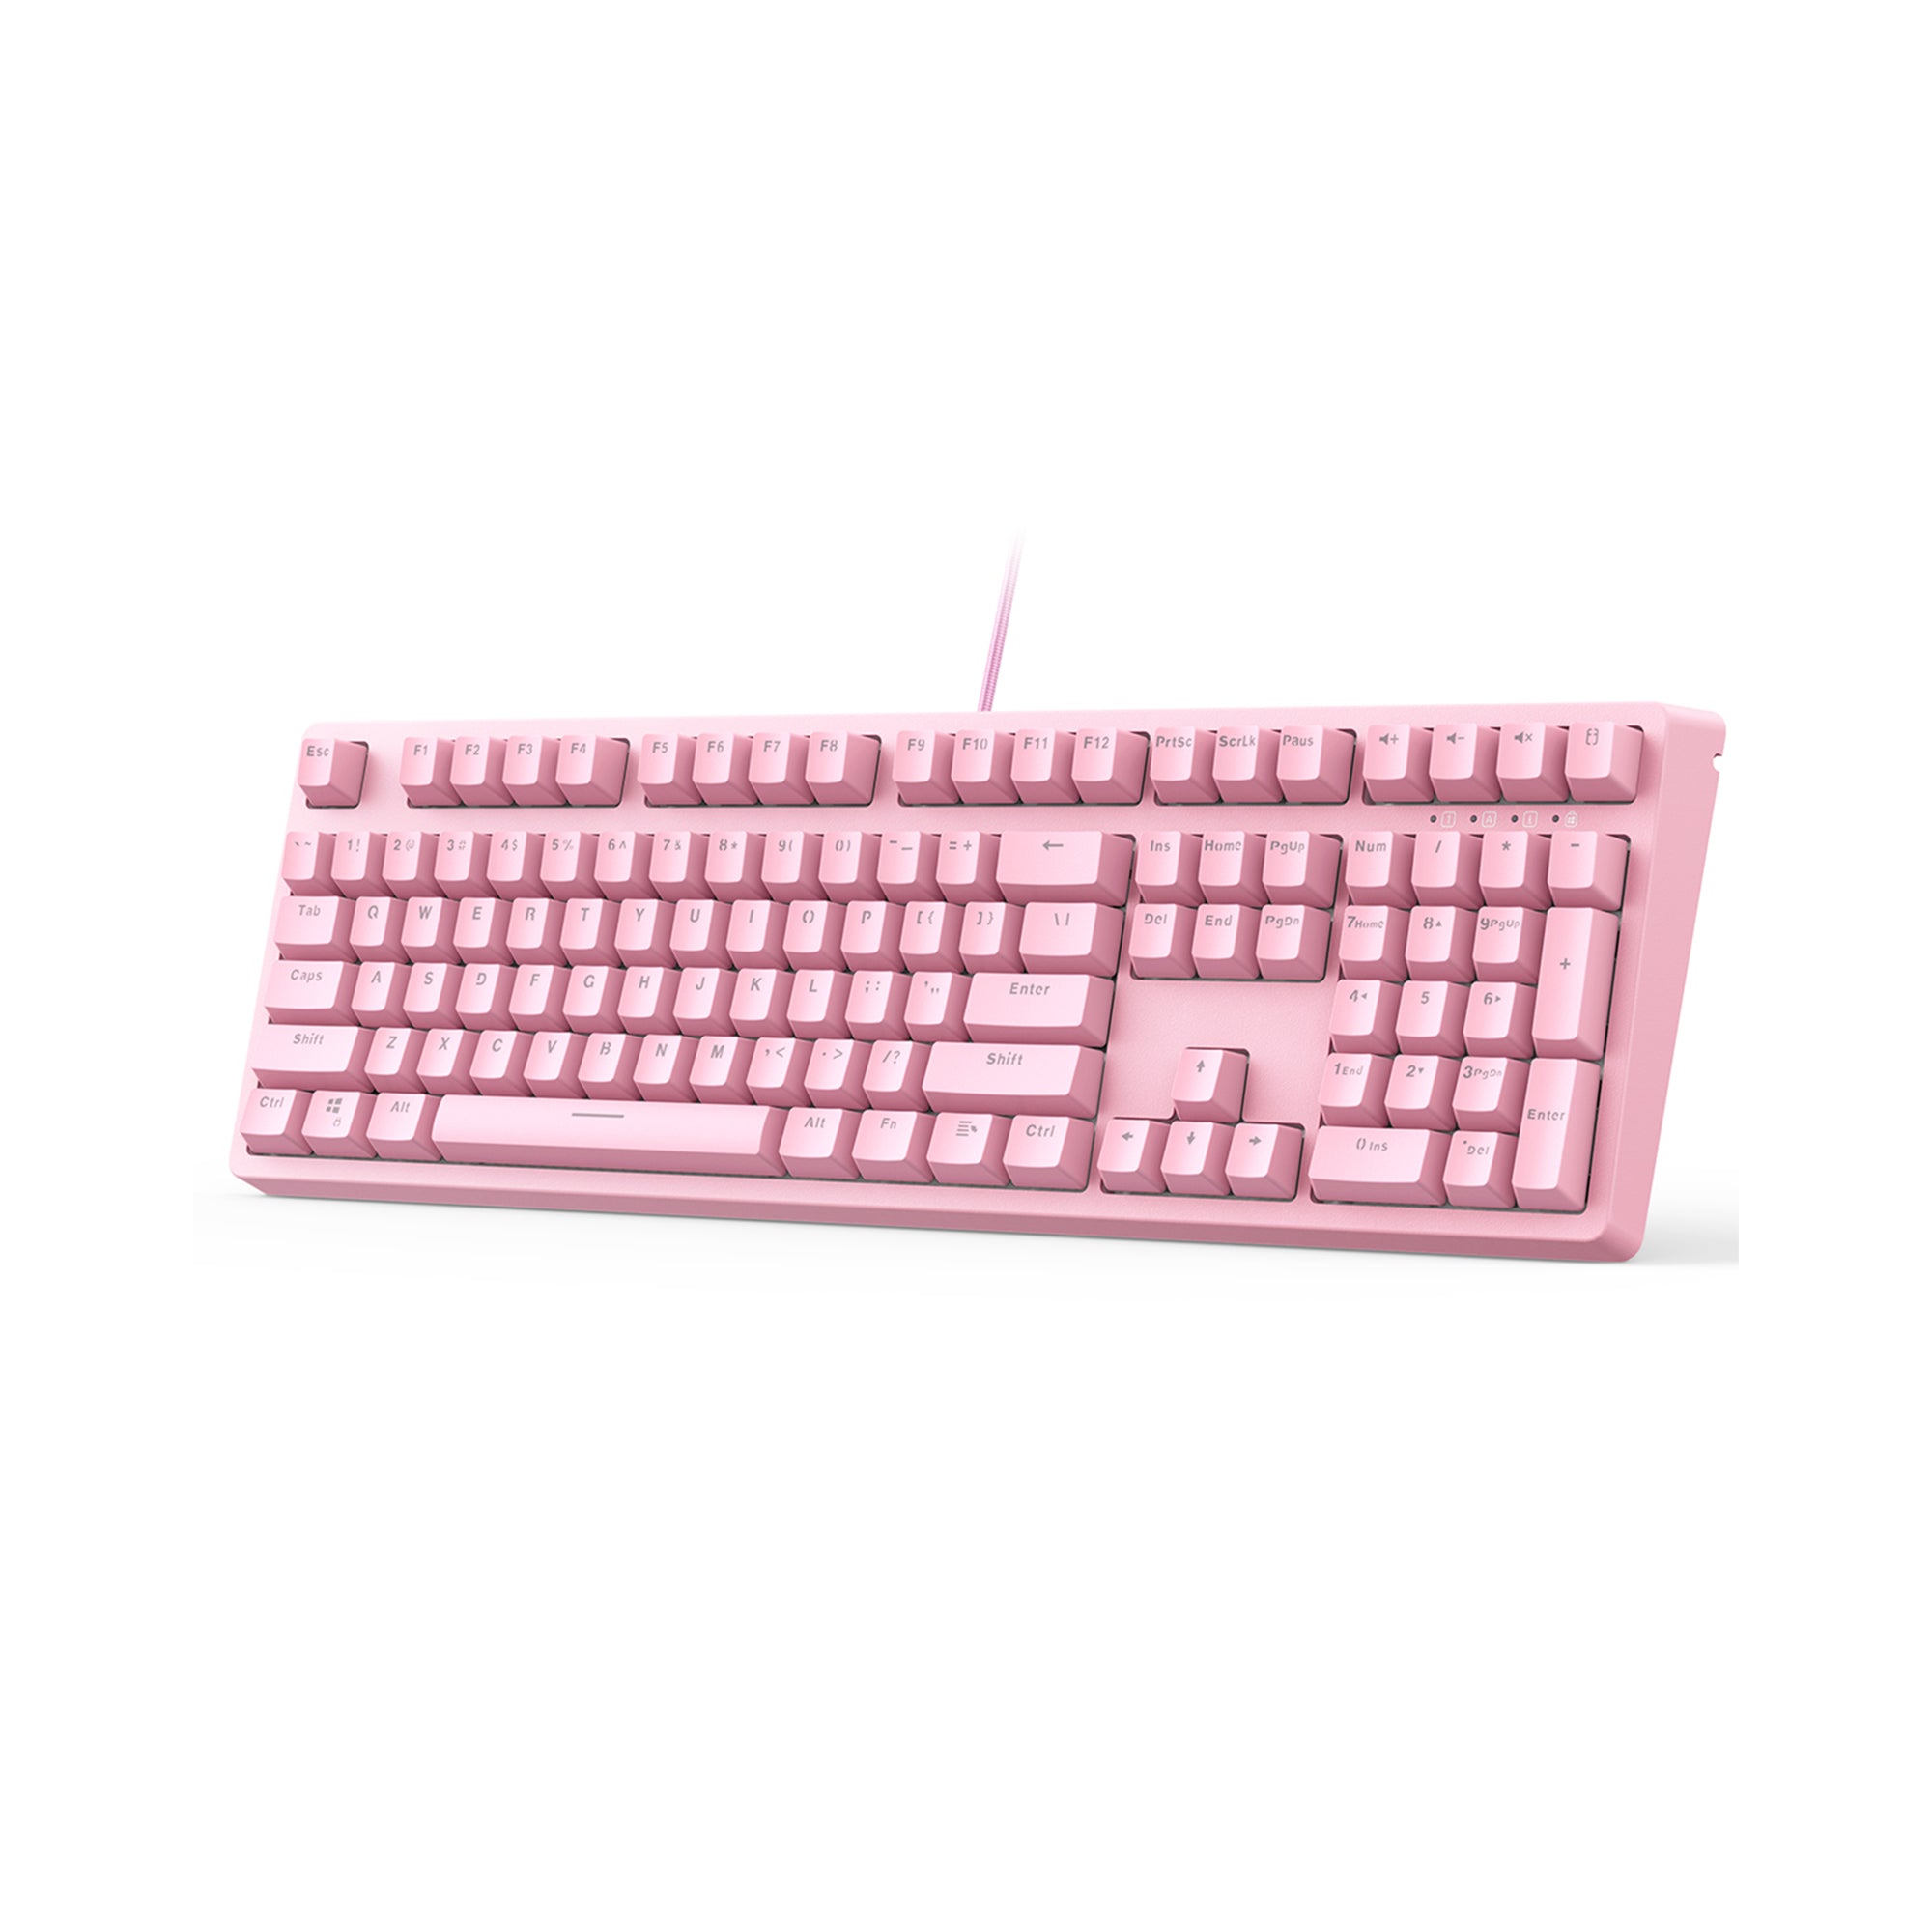 KM-G15 Pink Mechanical Blue Switch Gaming Keyboard